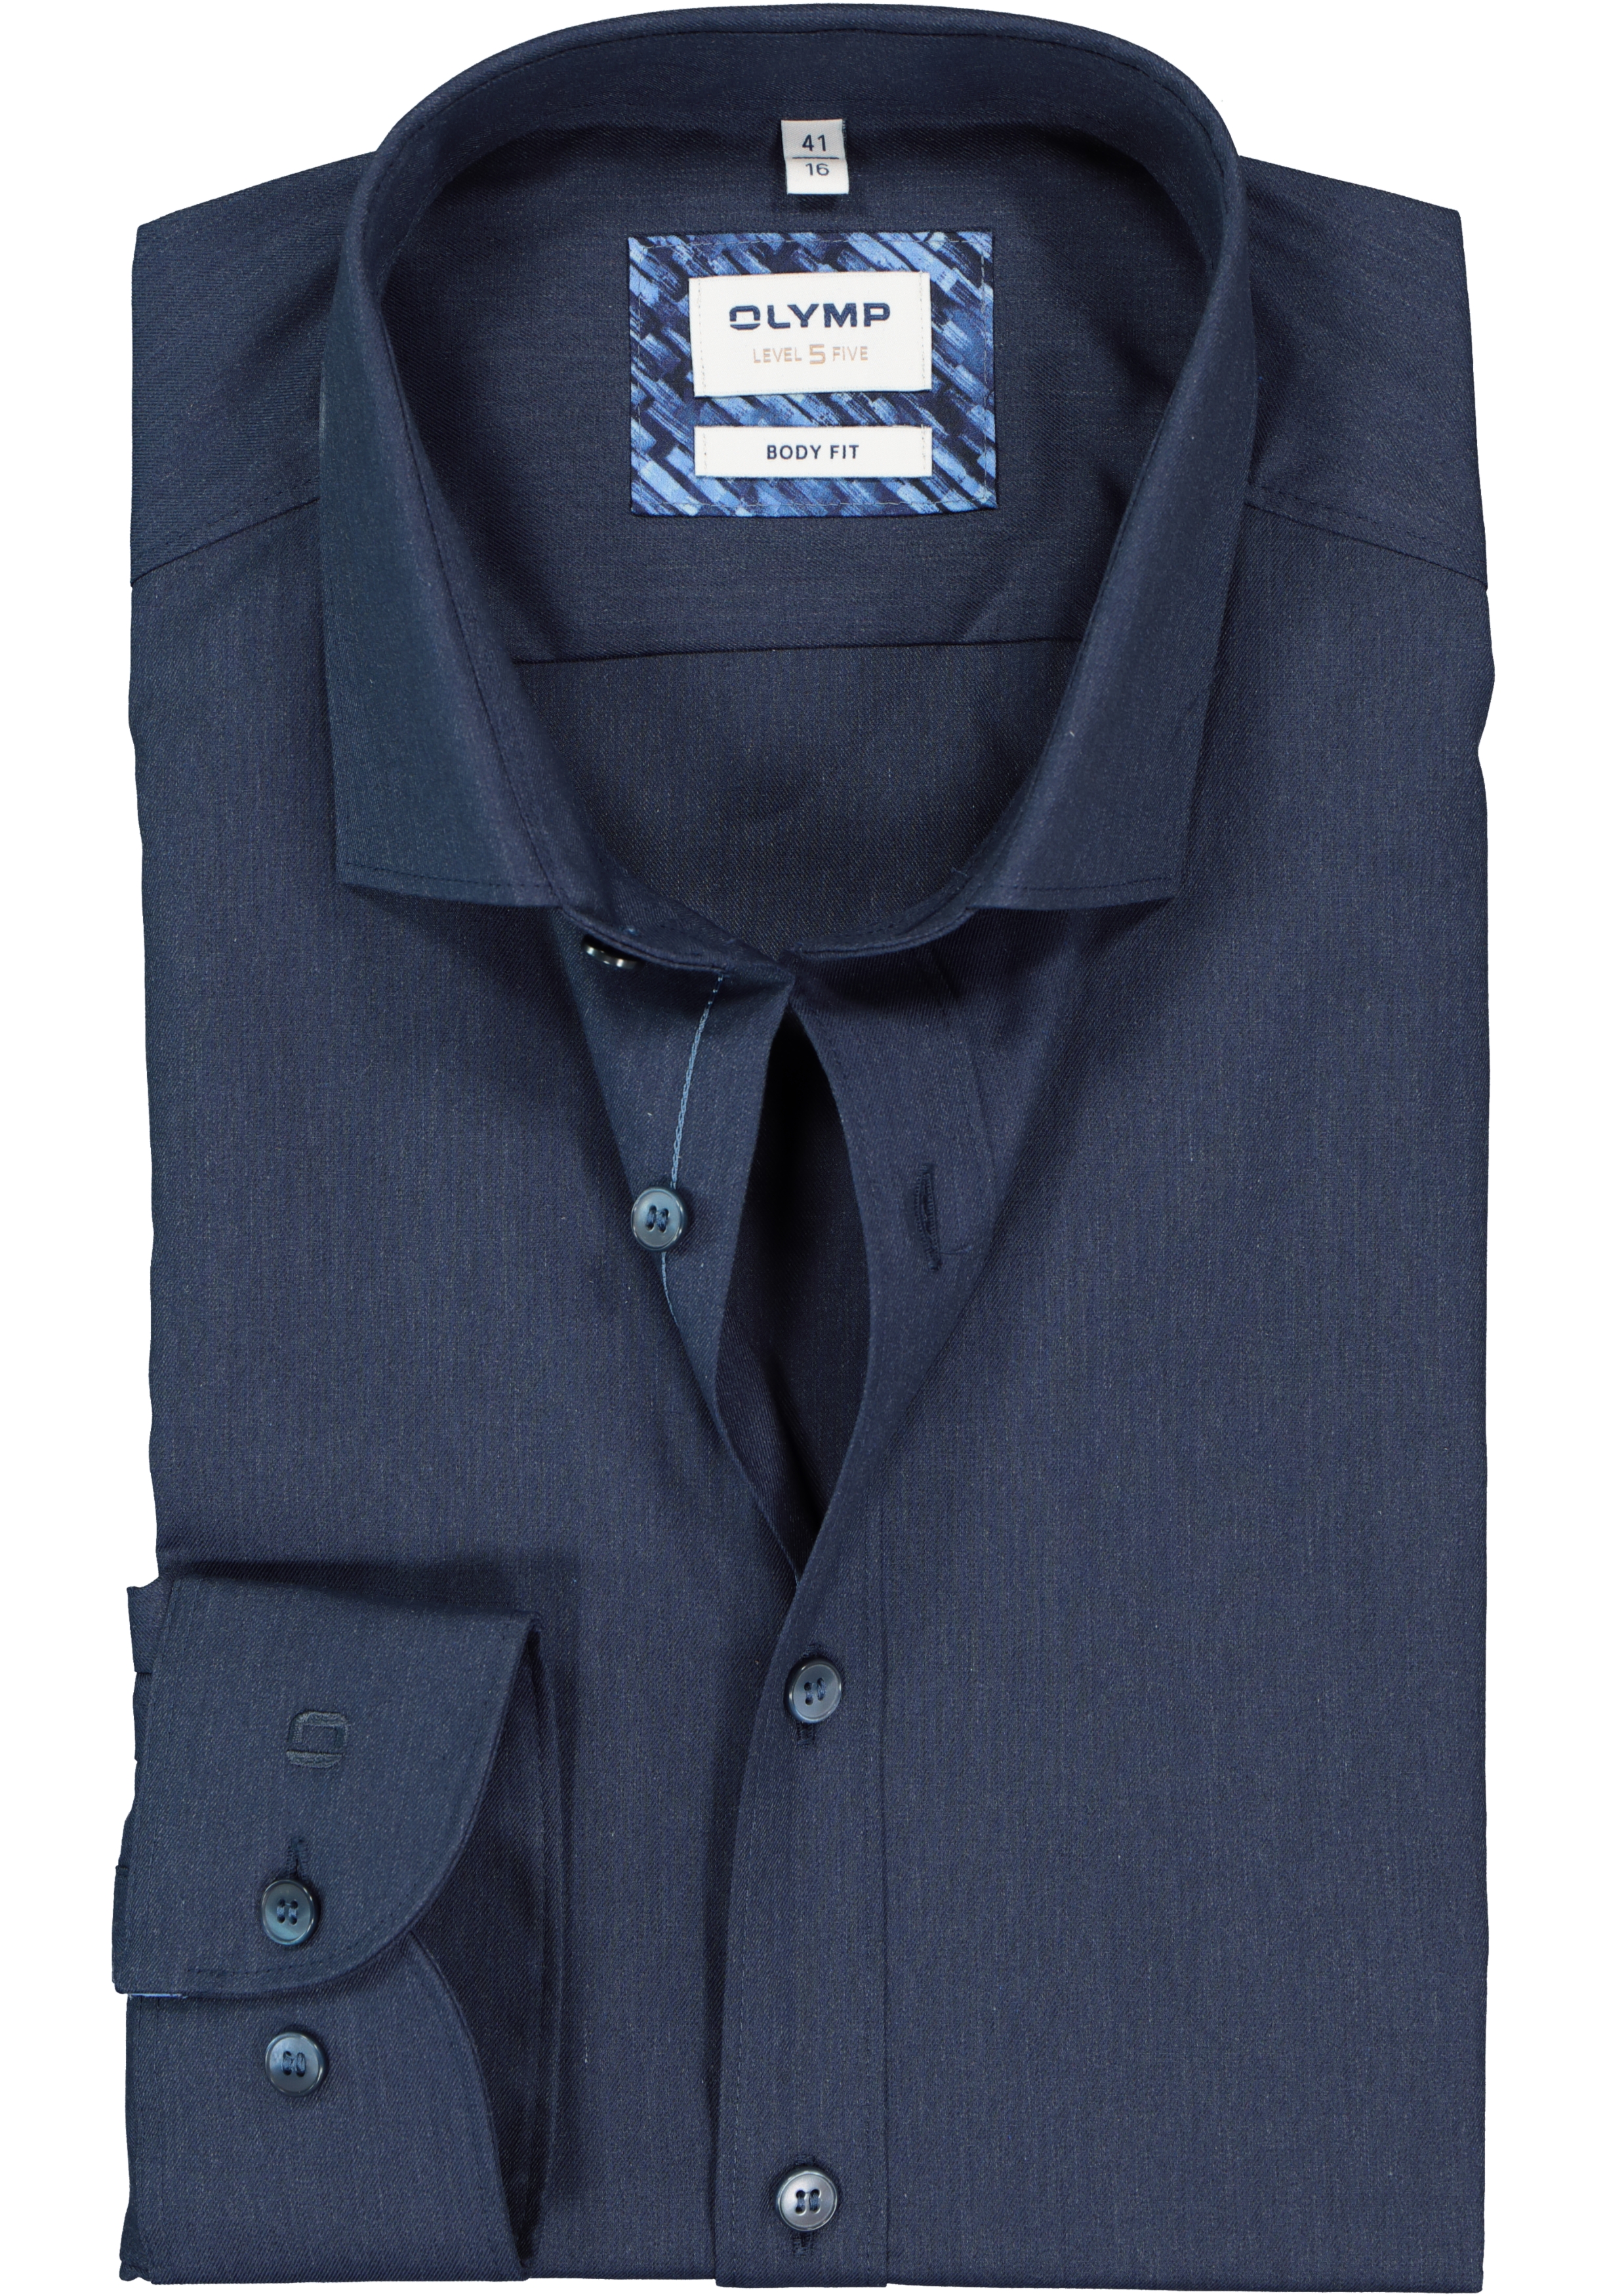 OLYMP Level 5 body fit overhemd, marine blauw (contrast)